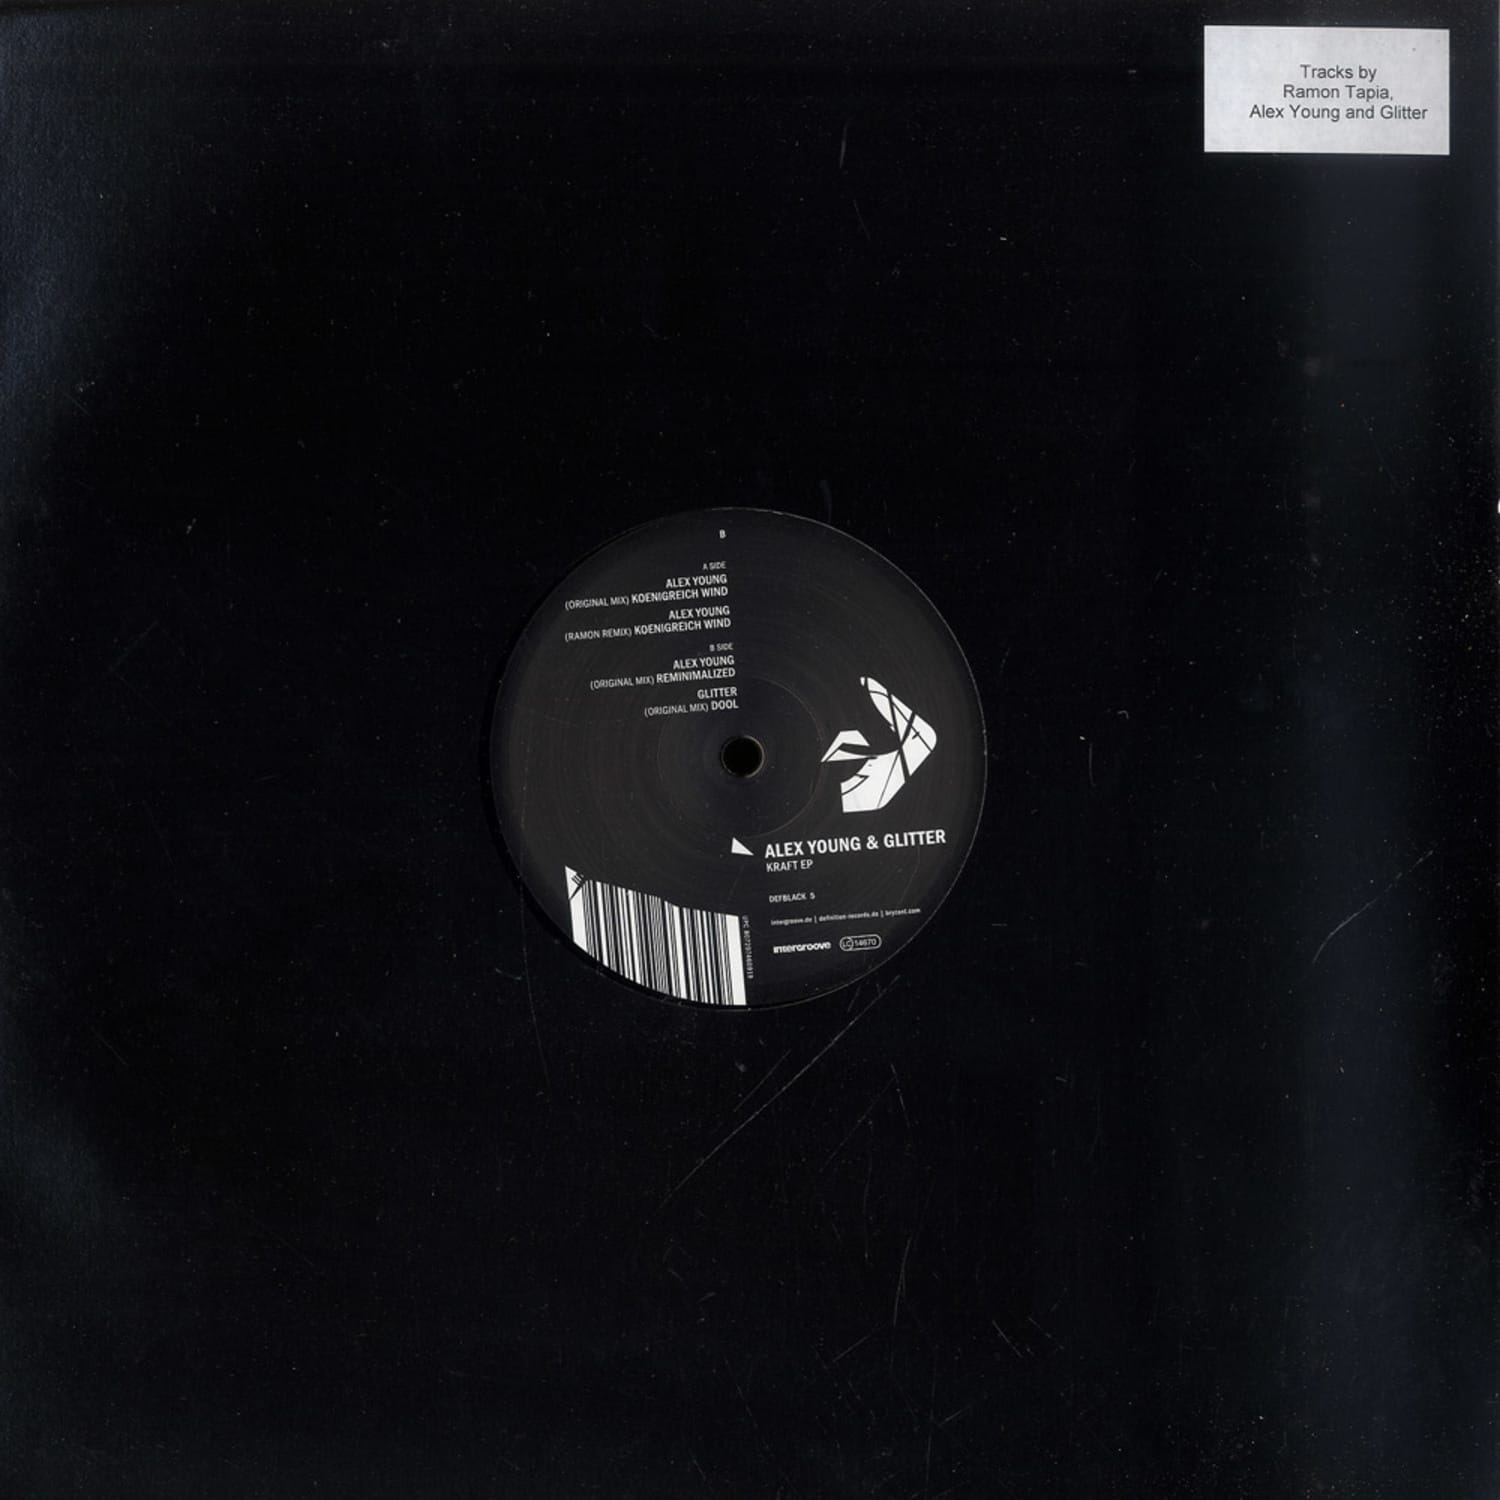 Alex Young & Glitter - KRAFT EP / INCL RAMON TAPIA RMX